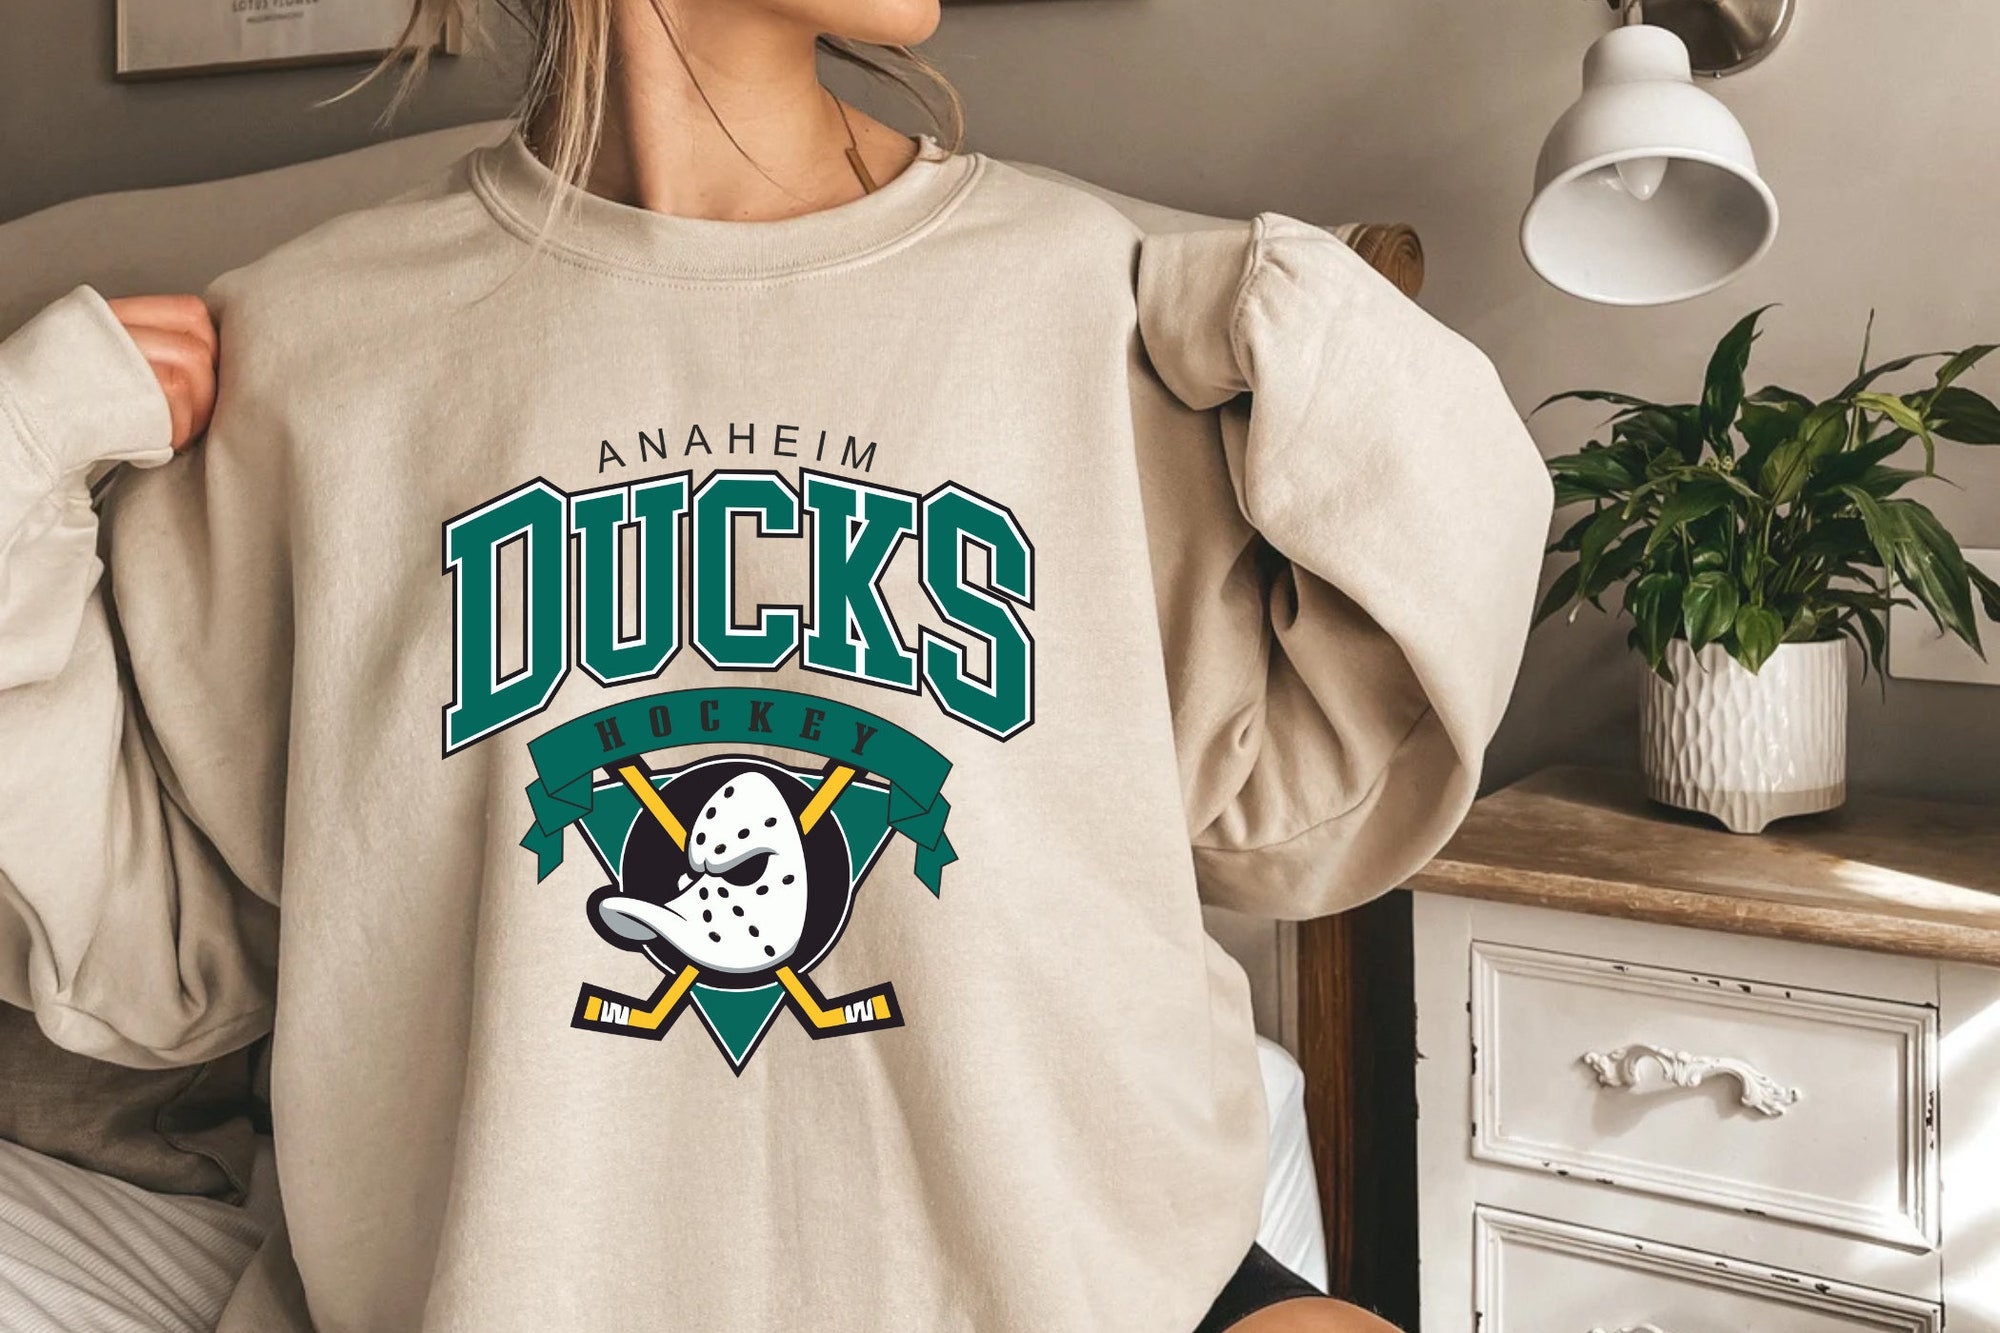 Ducks of Anaheim Tee shirt medium sold✓ Sweatpants medium sold